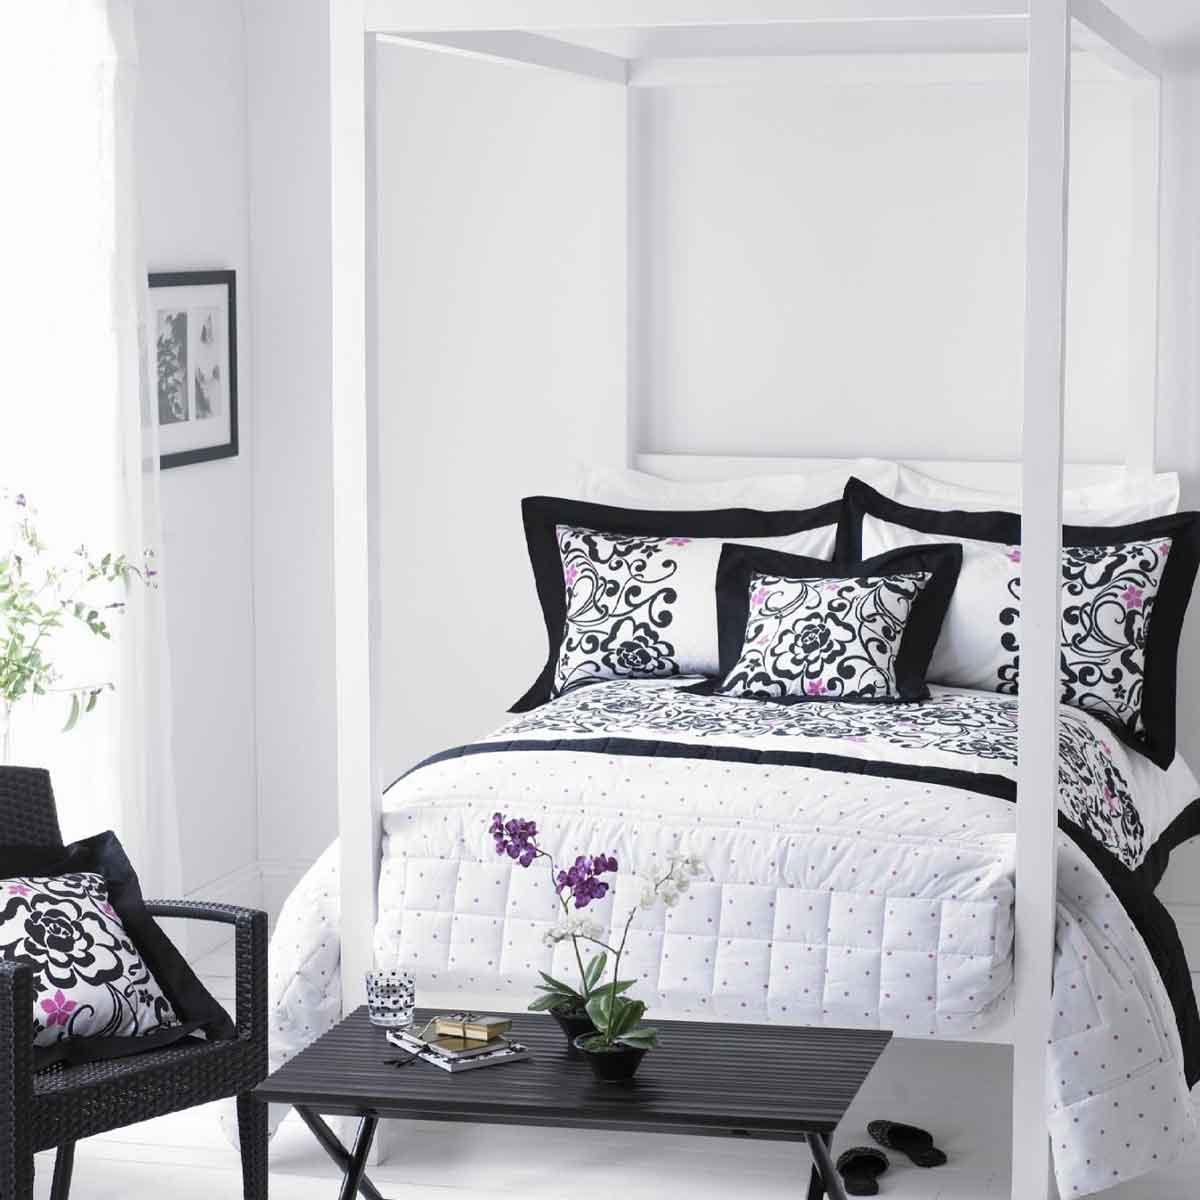 black white bedroom designs photo - 9